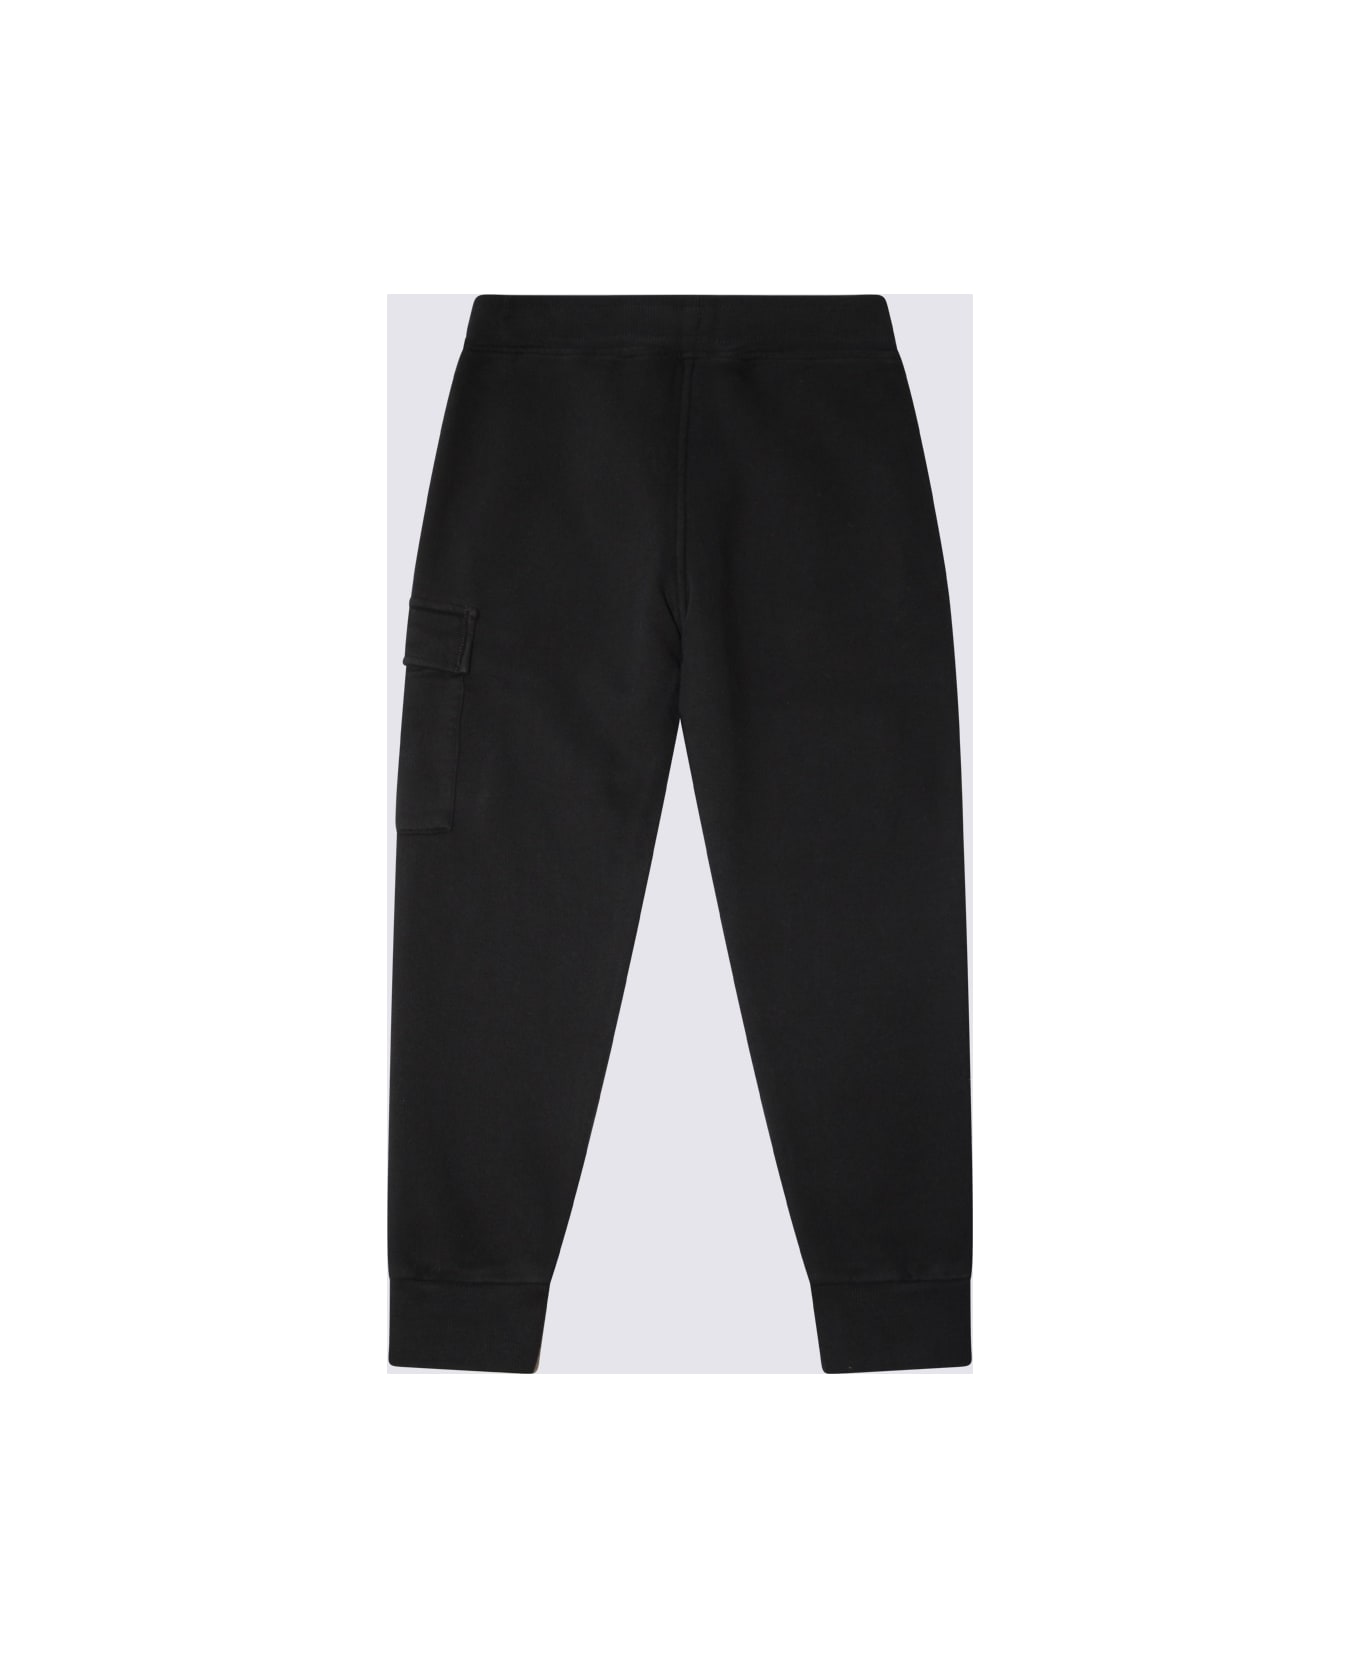 C.P. Company Undersixteen Black Cotton Pants - Nero/Black